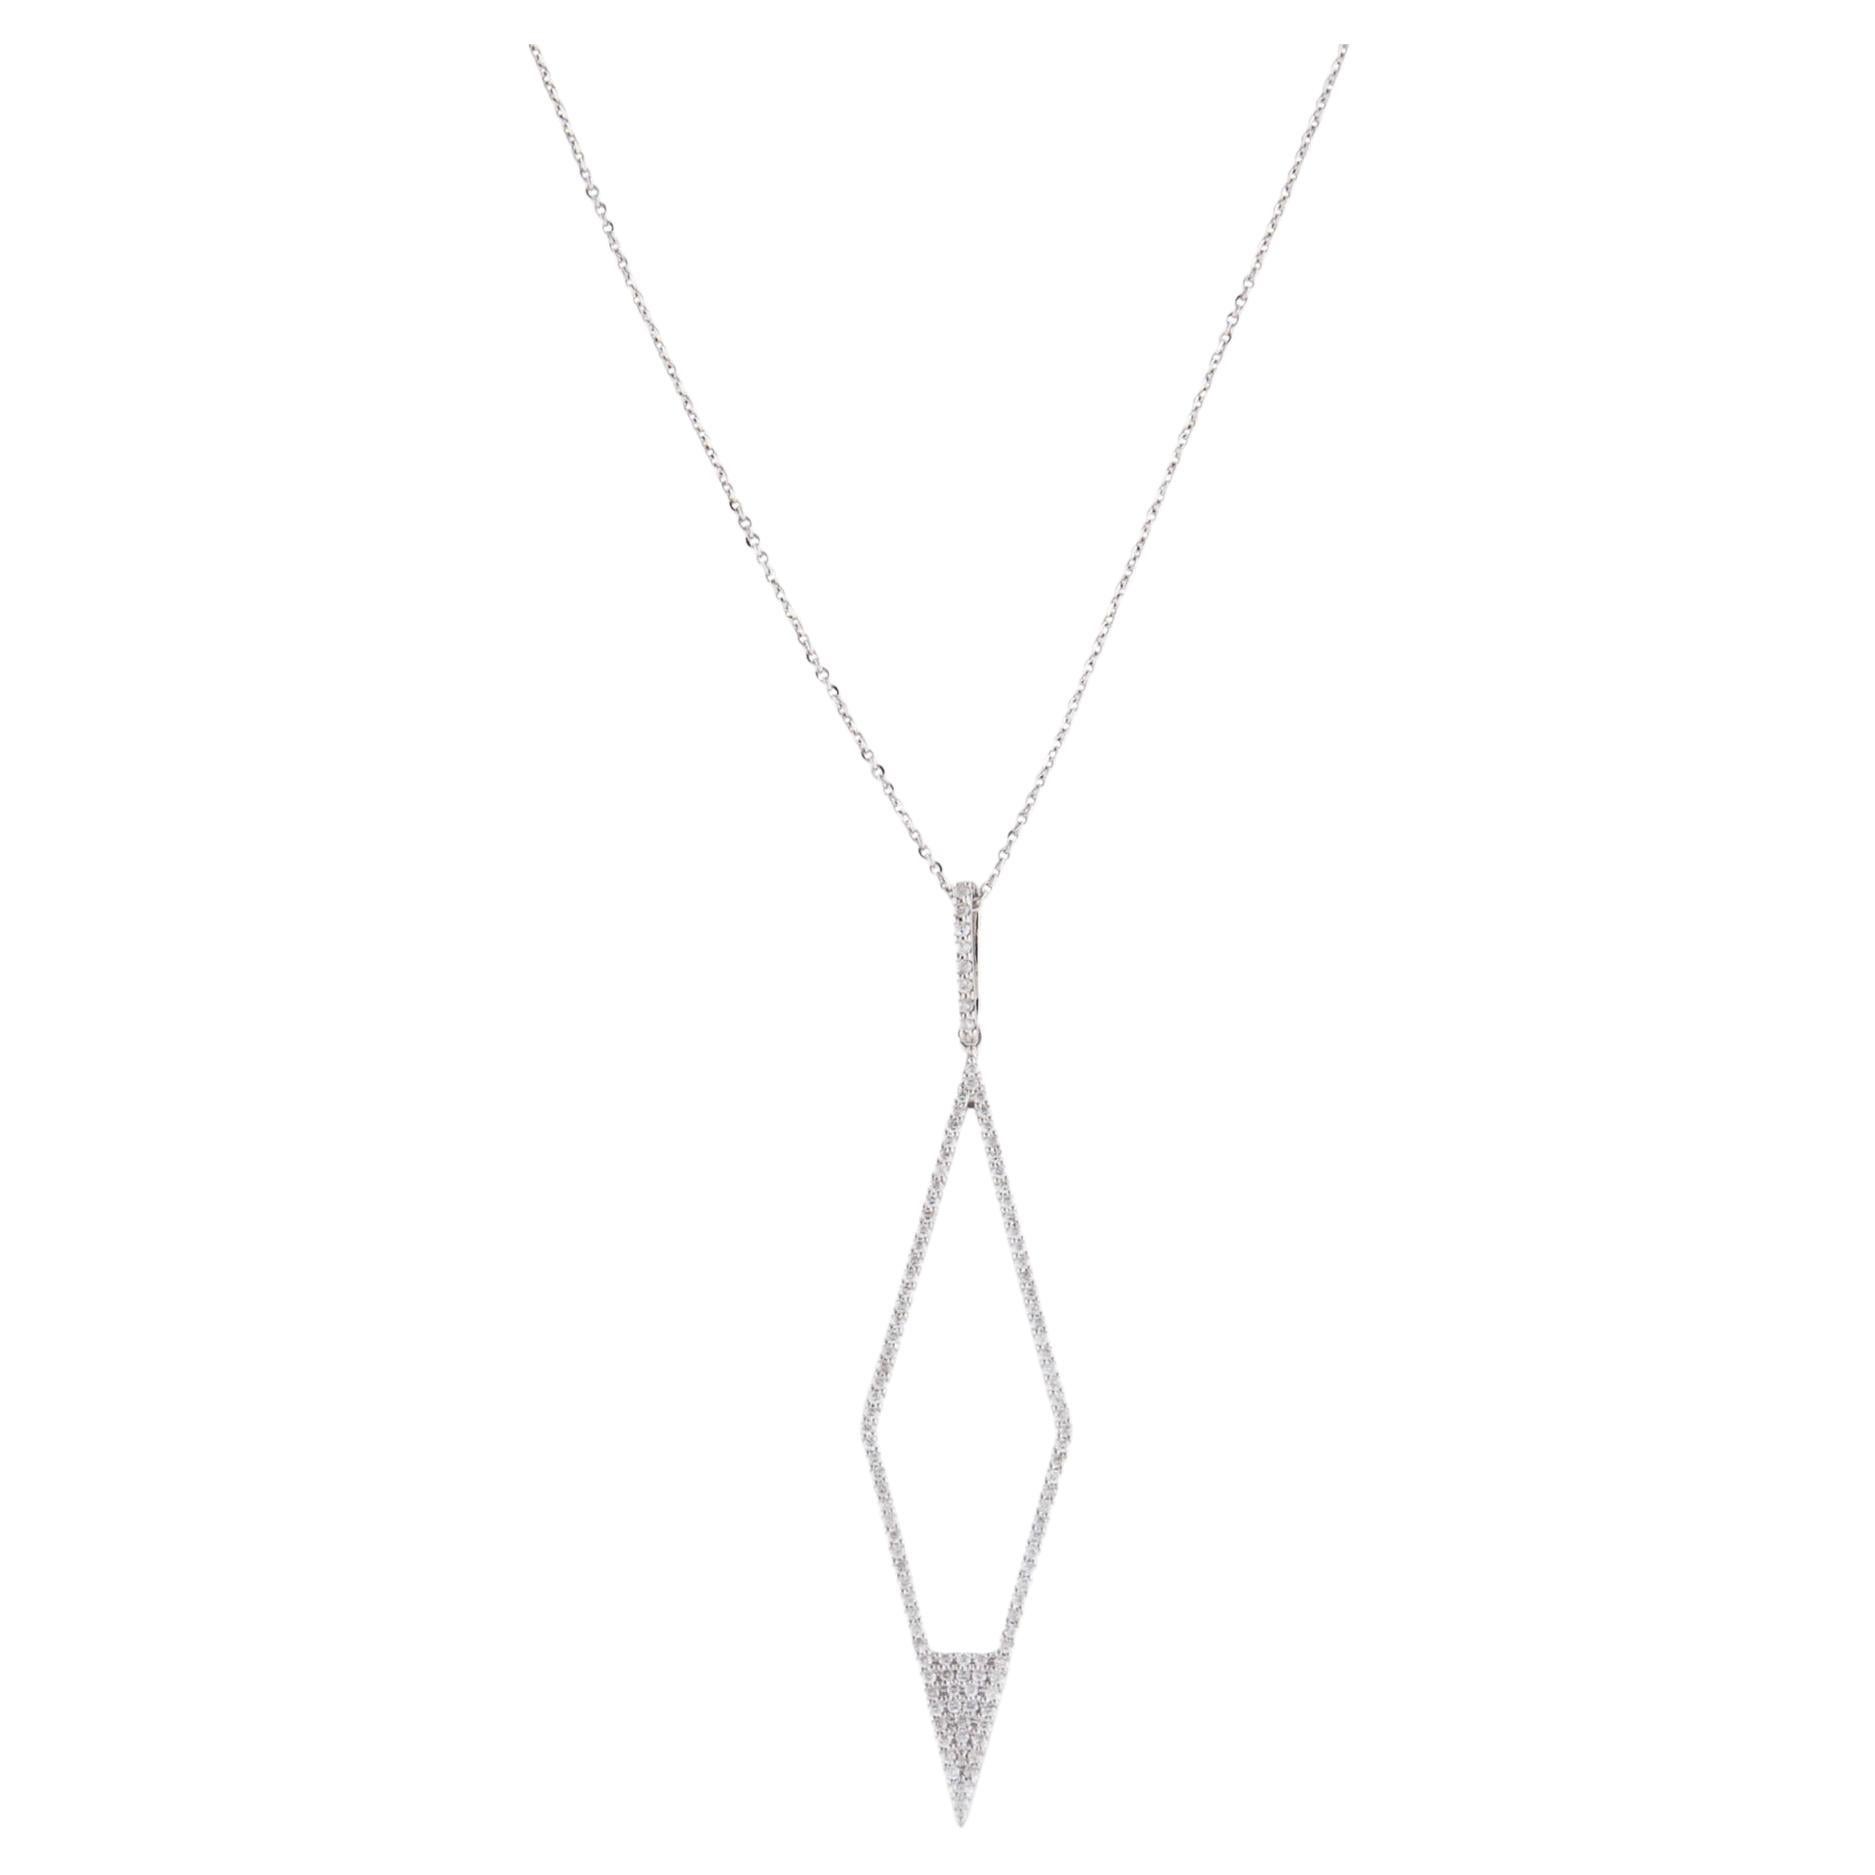 Exquisite 14K Diamond Pendant Necklace - Elegant & Timeless Statement Piece For Sale